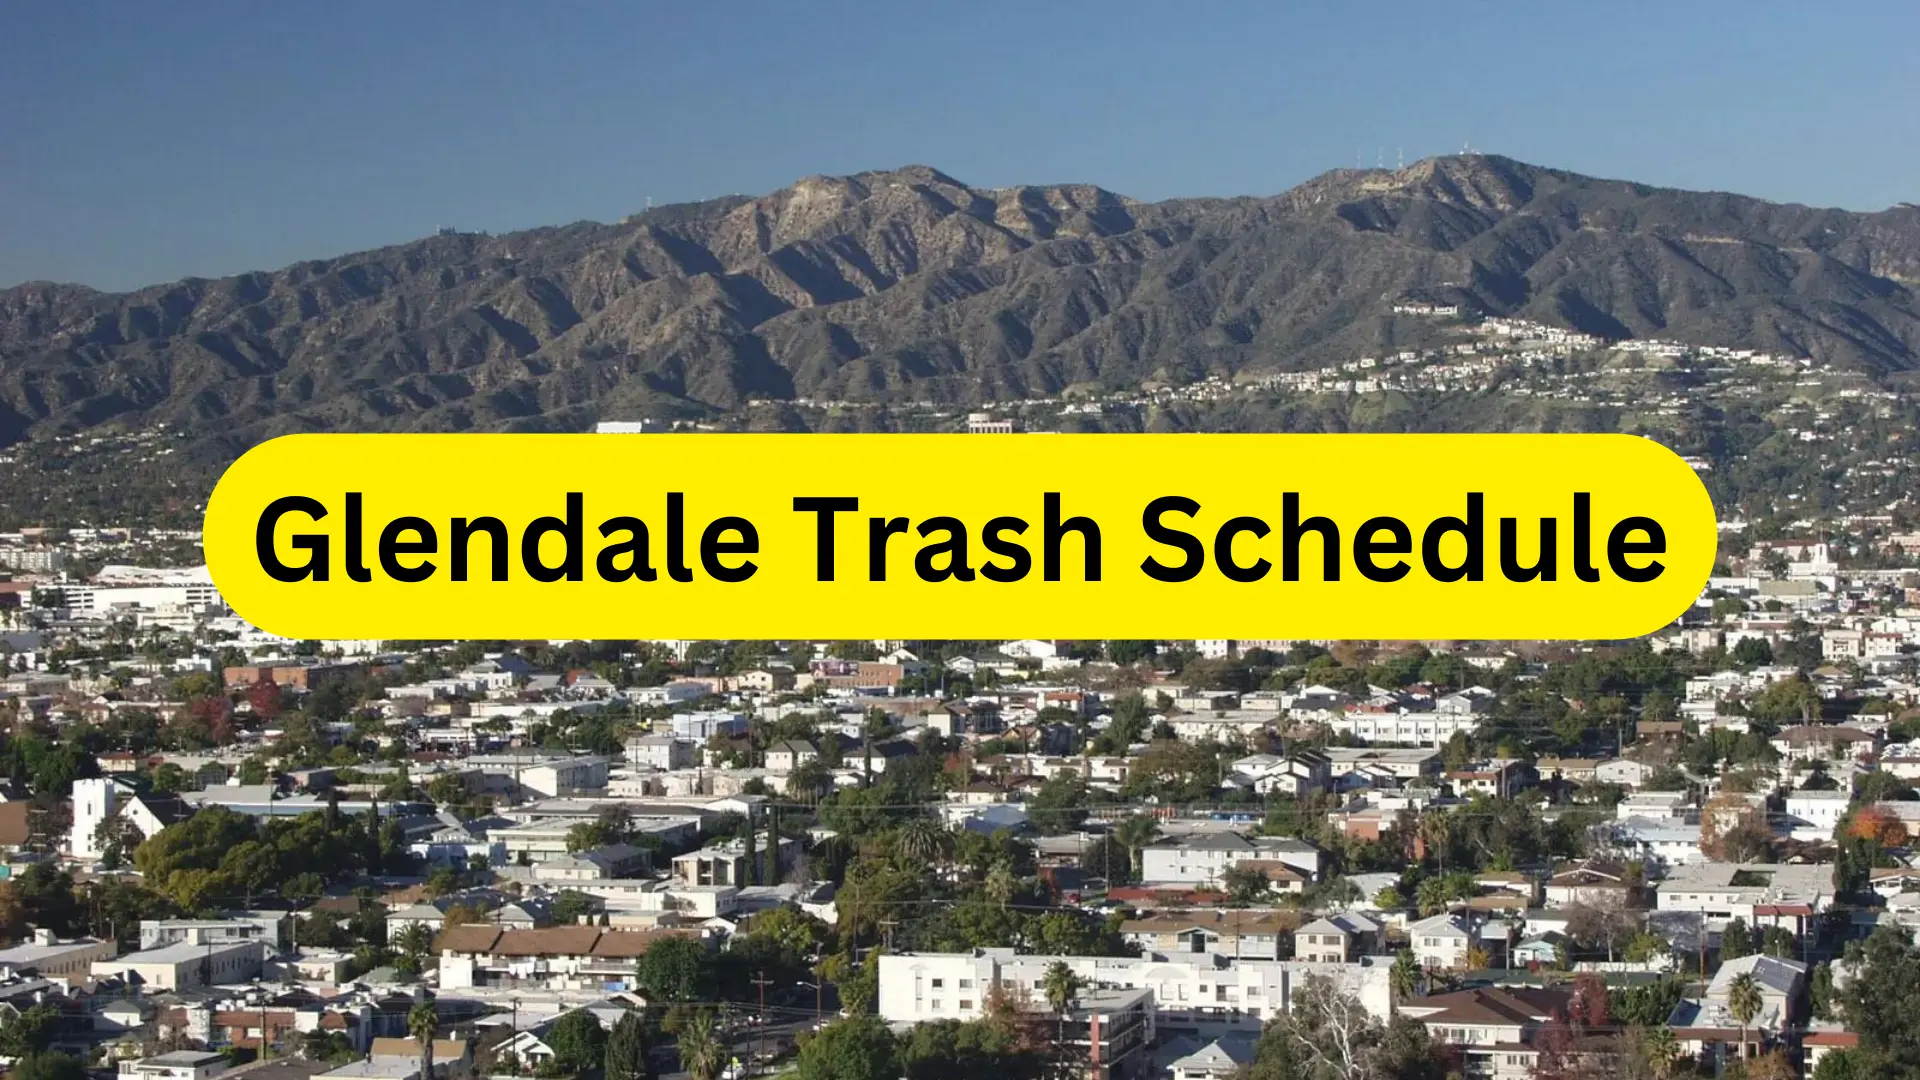 Glendale Trash Schedule